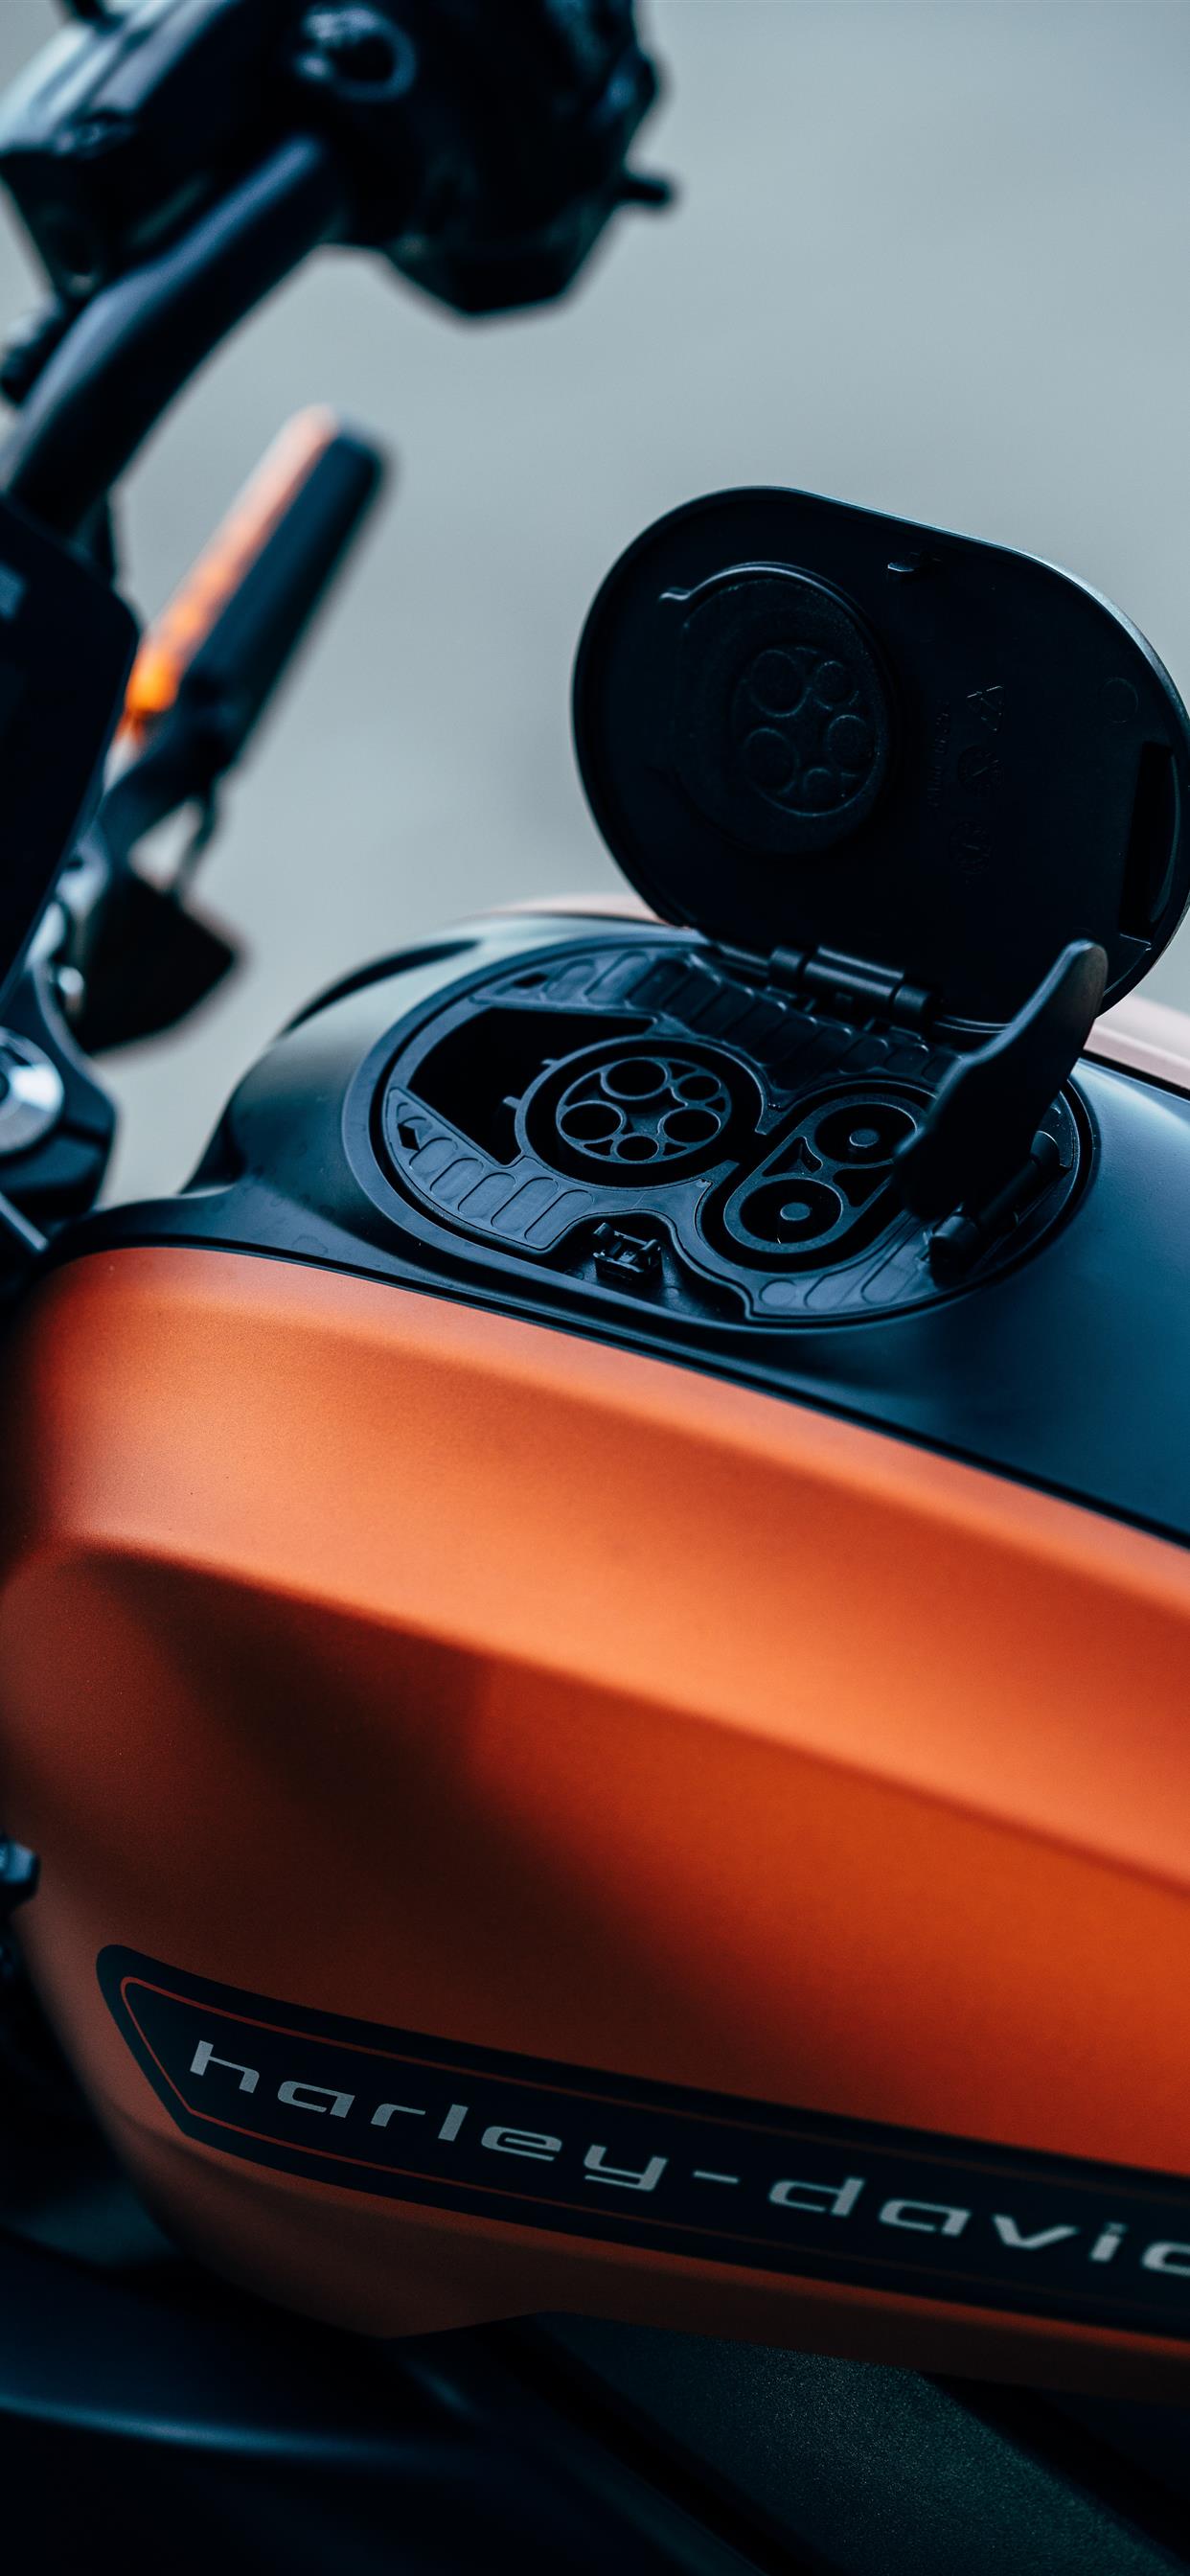 orange and black Harley Davidson motorcycle iPhone X Wallpapers Free  Download